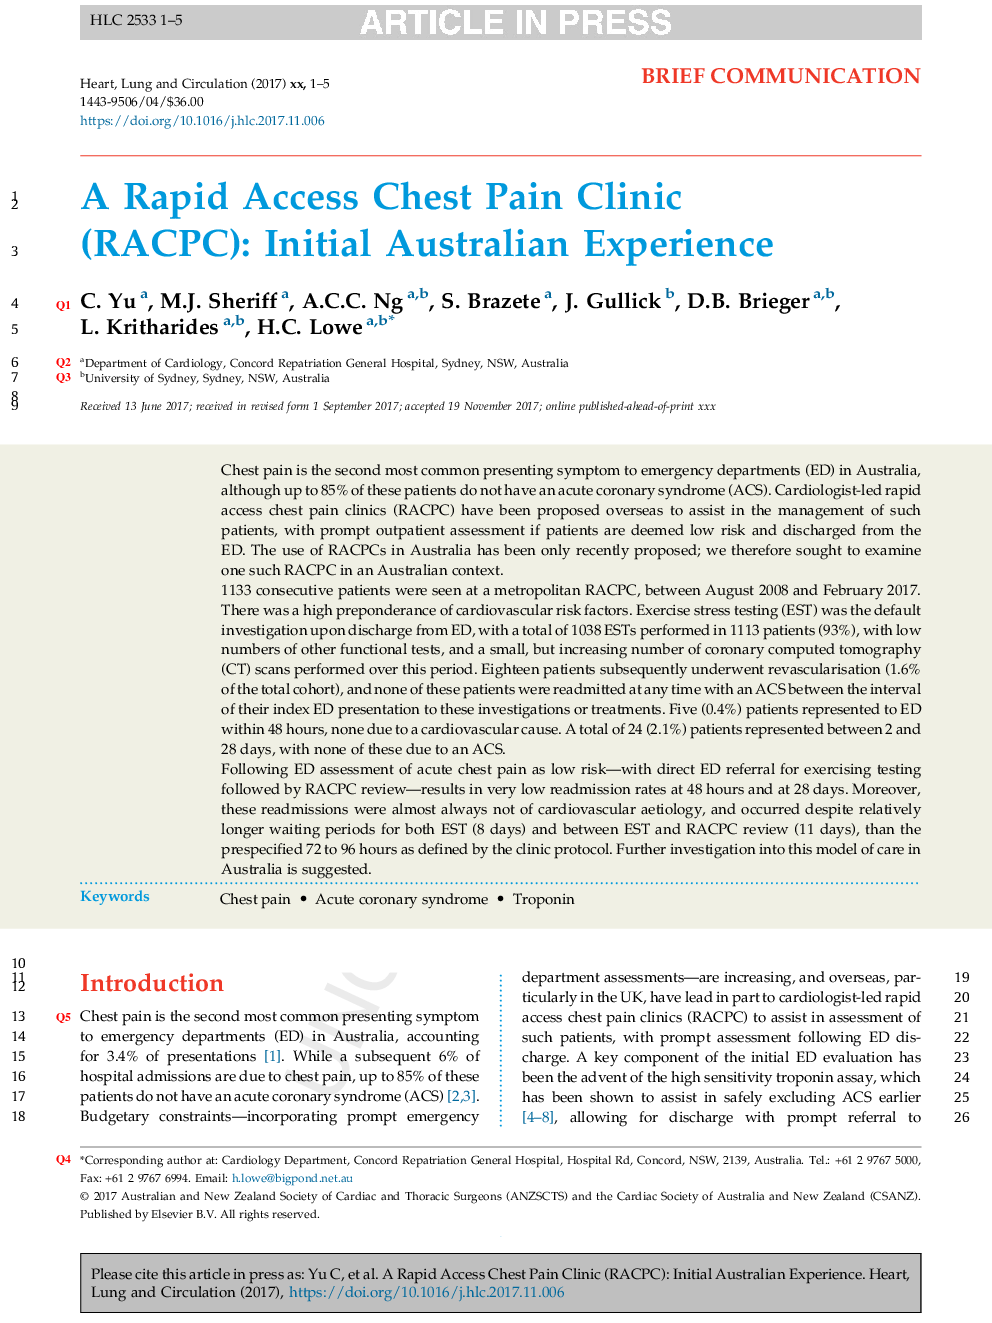 A Rapid Access Chest Pain Clinic (RACPC): Initial Australian Experience